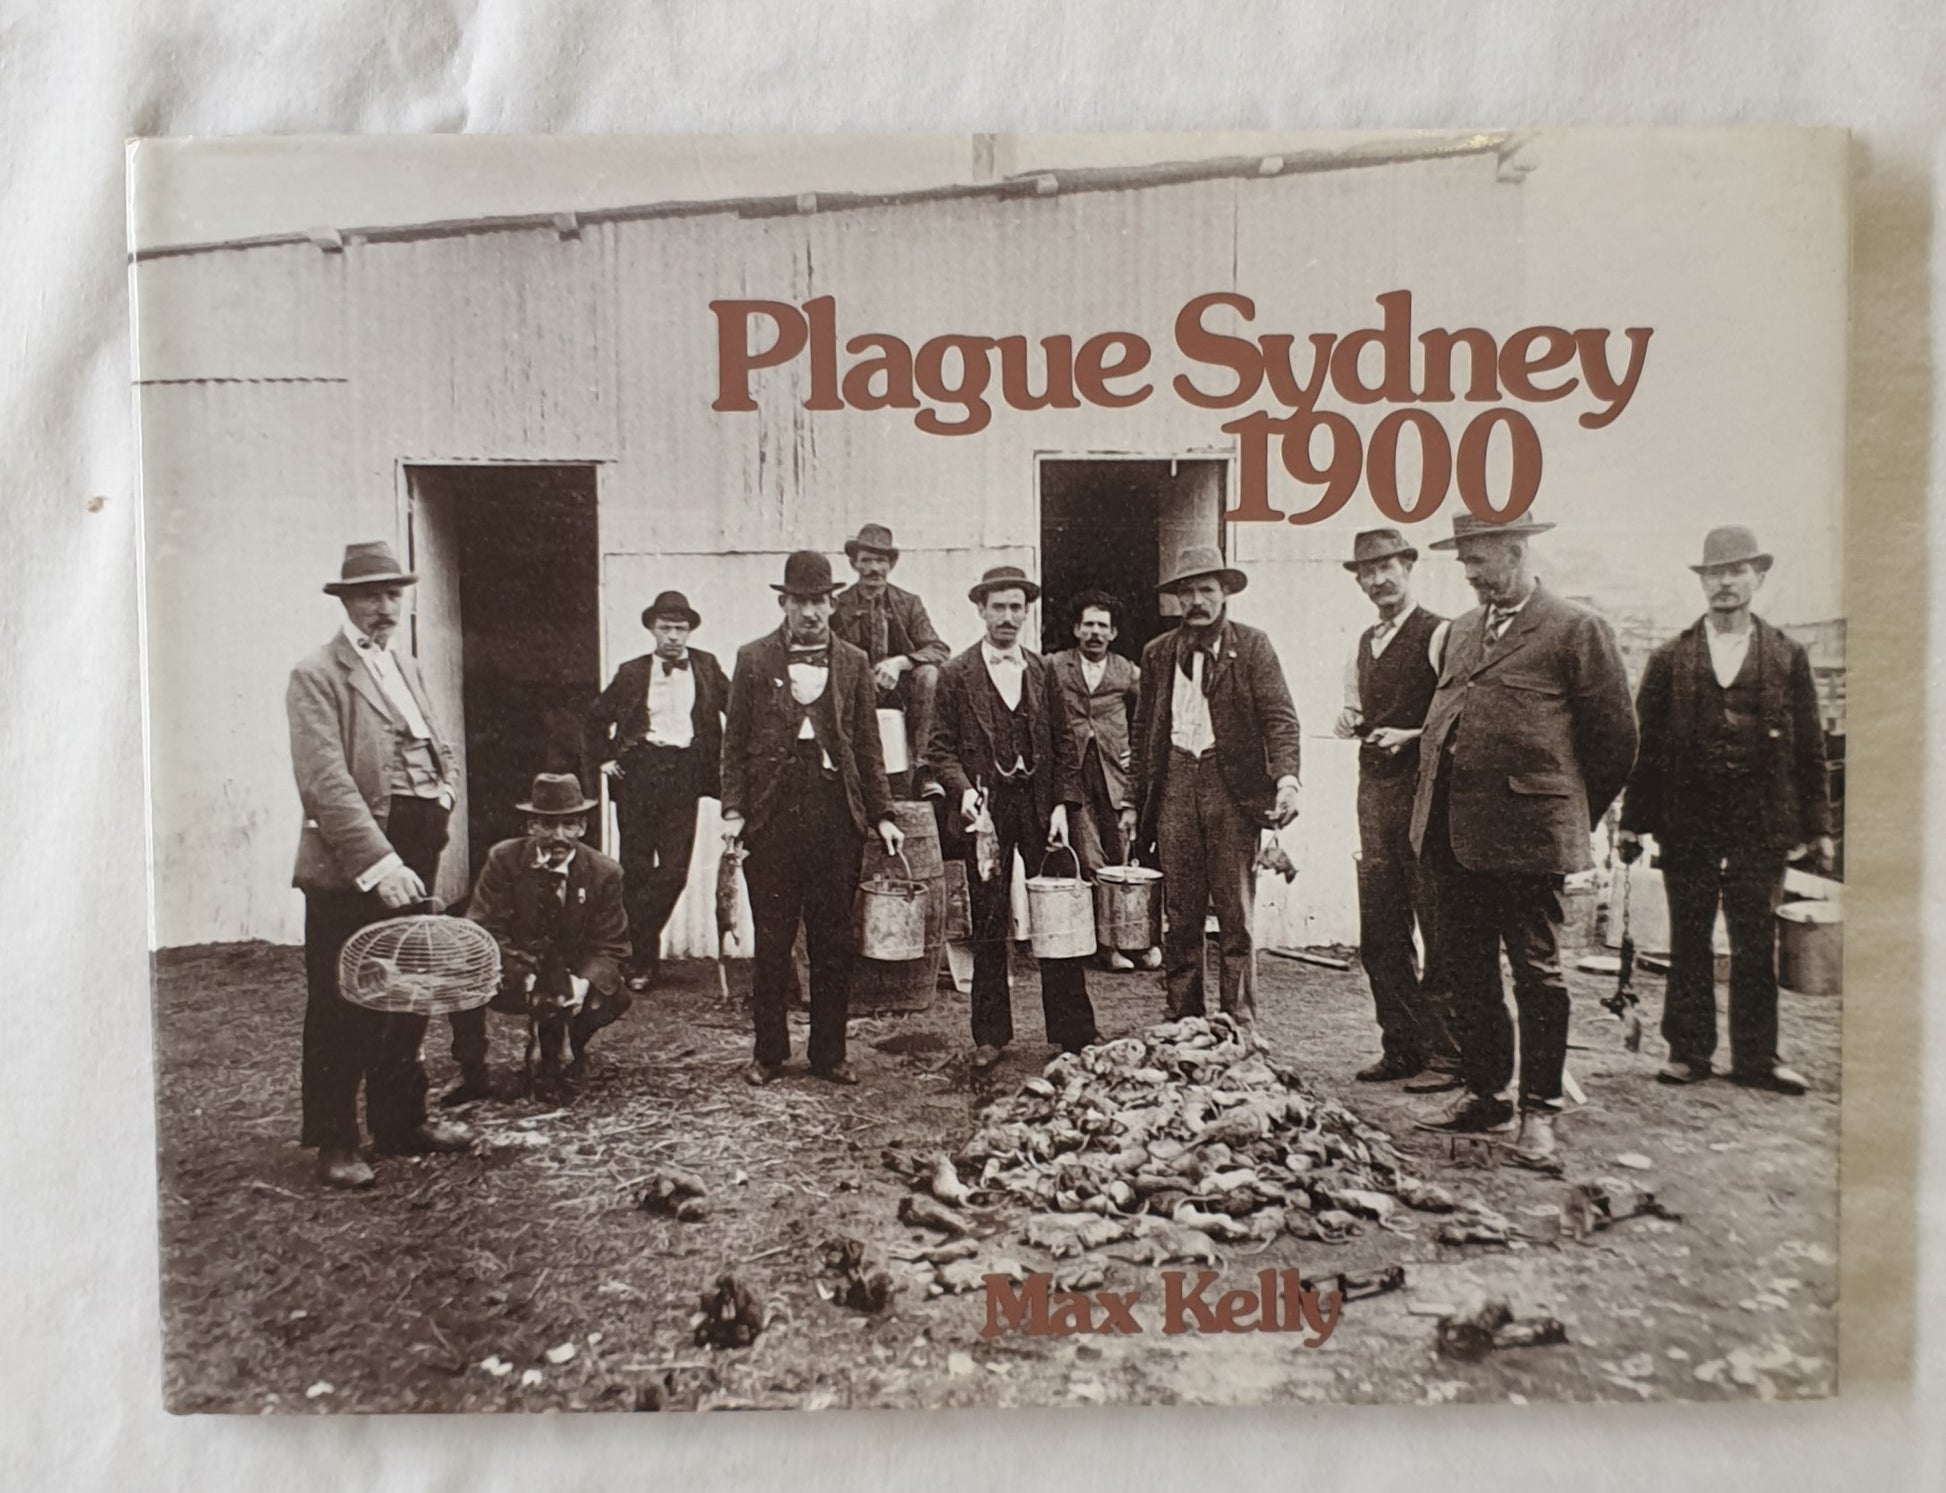 Plague Sydney 1900 by Max Kelly